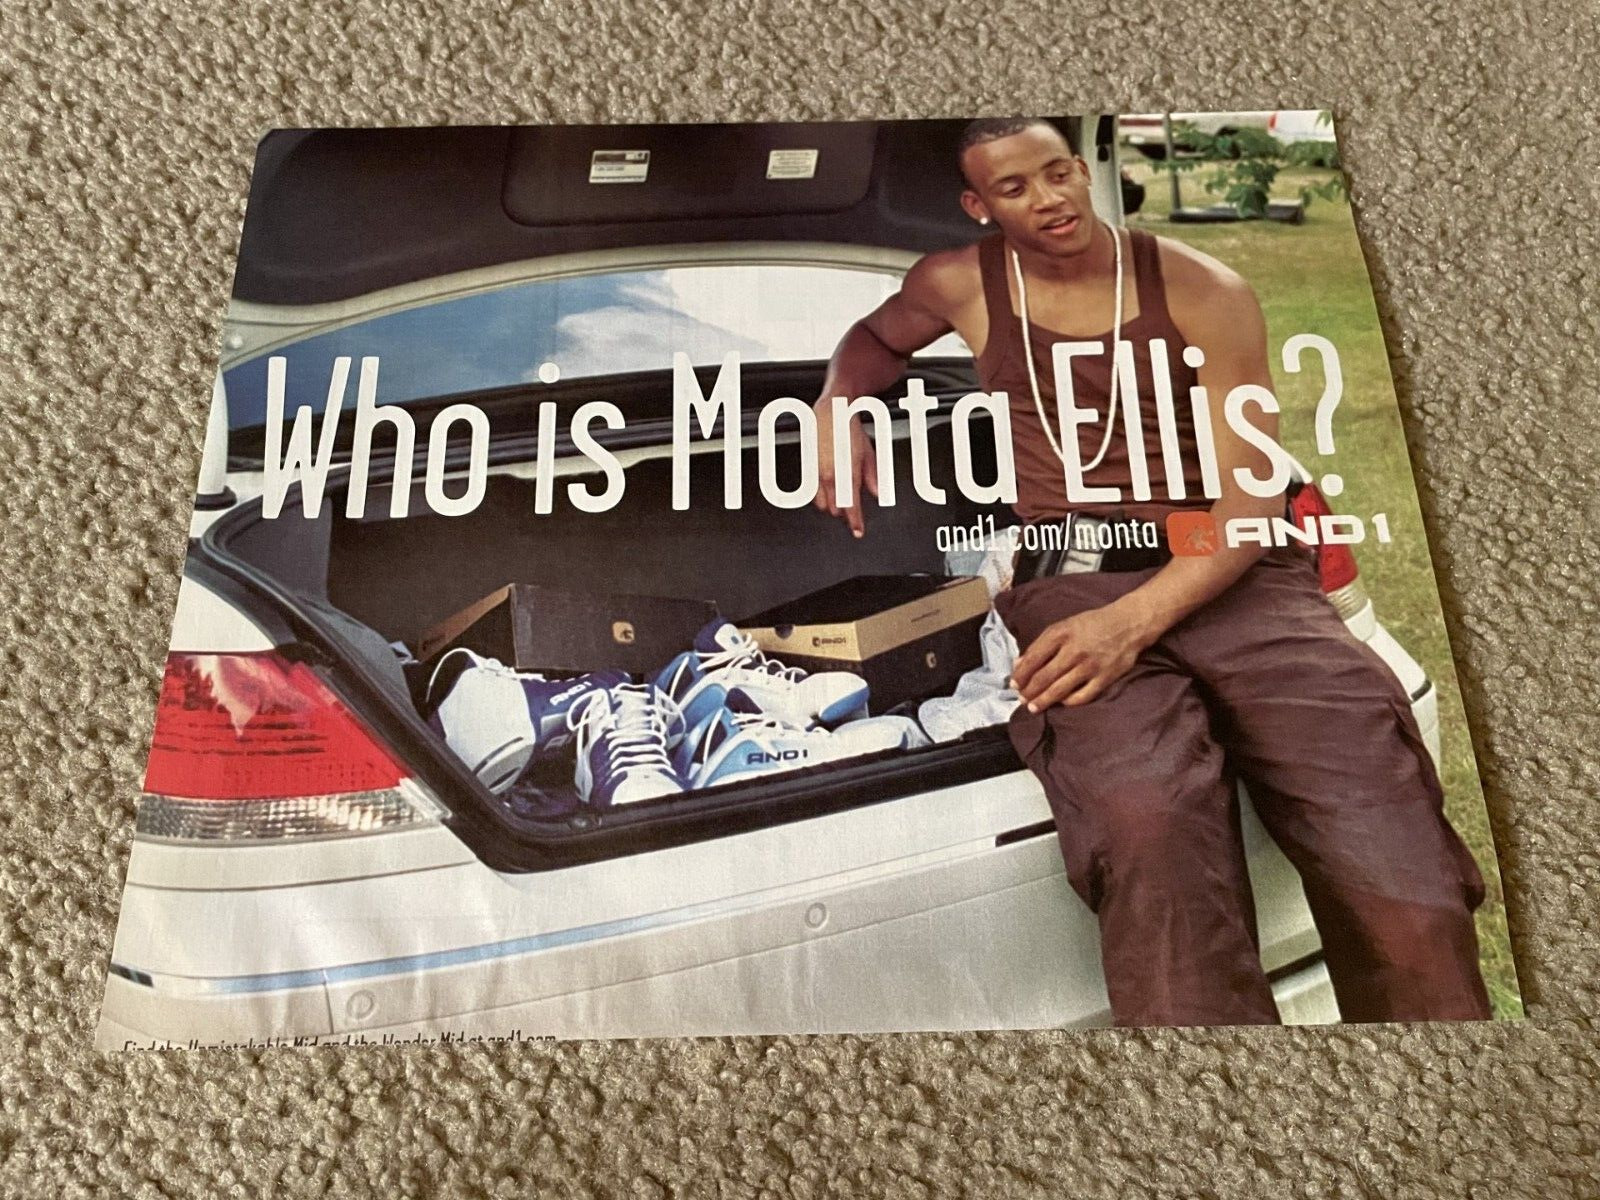 Vintage 2007 MONTA ELLIS AND1 MONTA Basketball Shoes Poster Print Ad